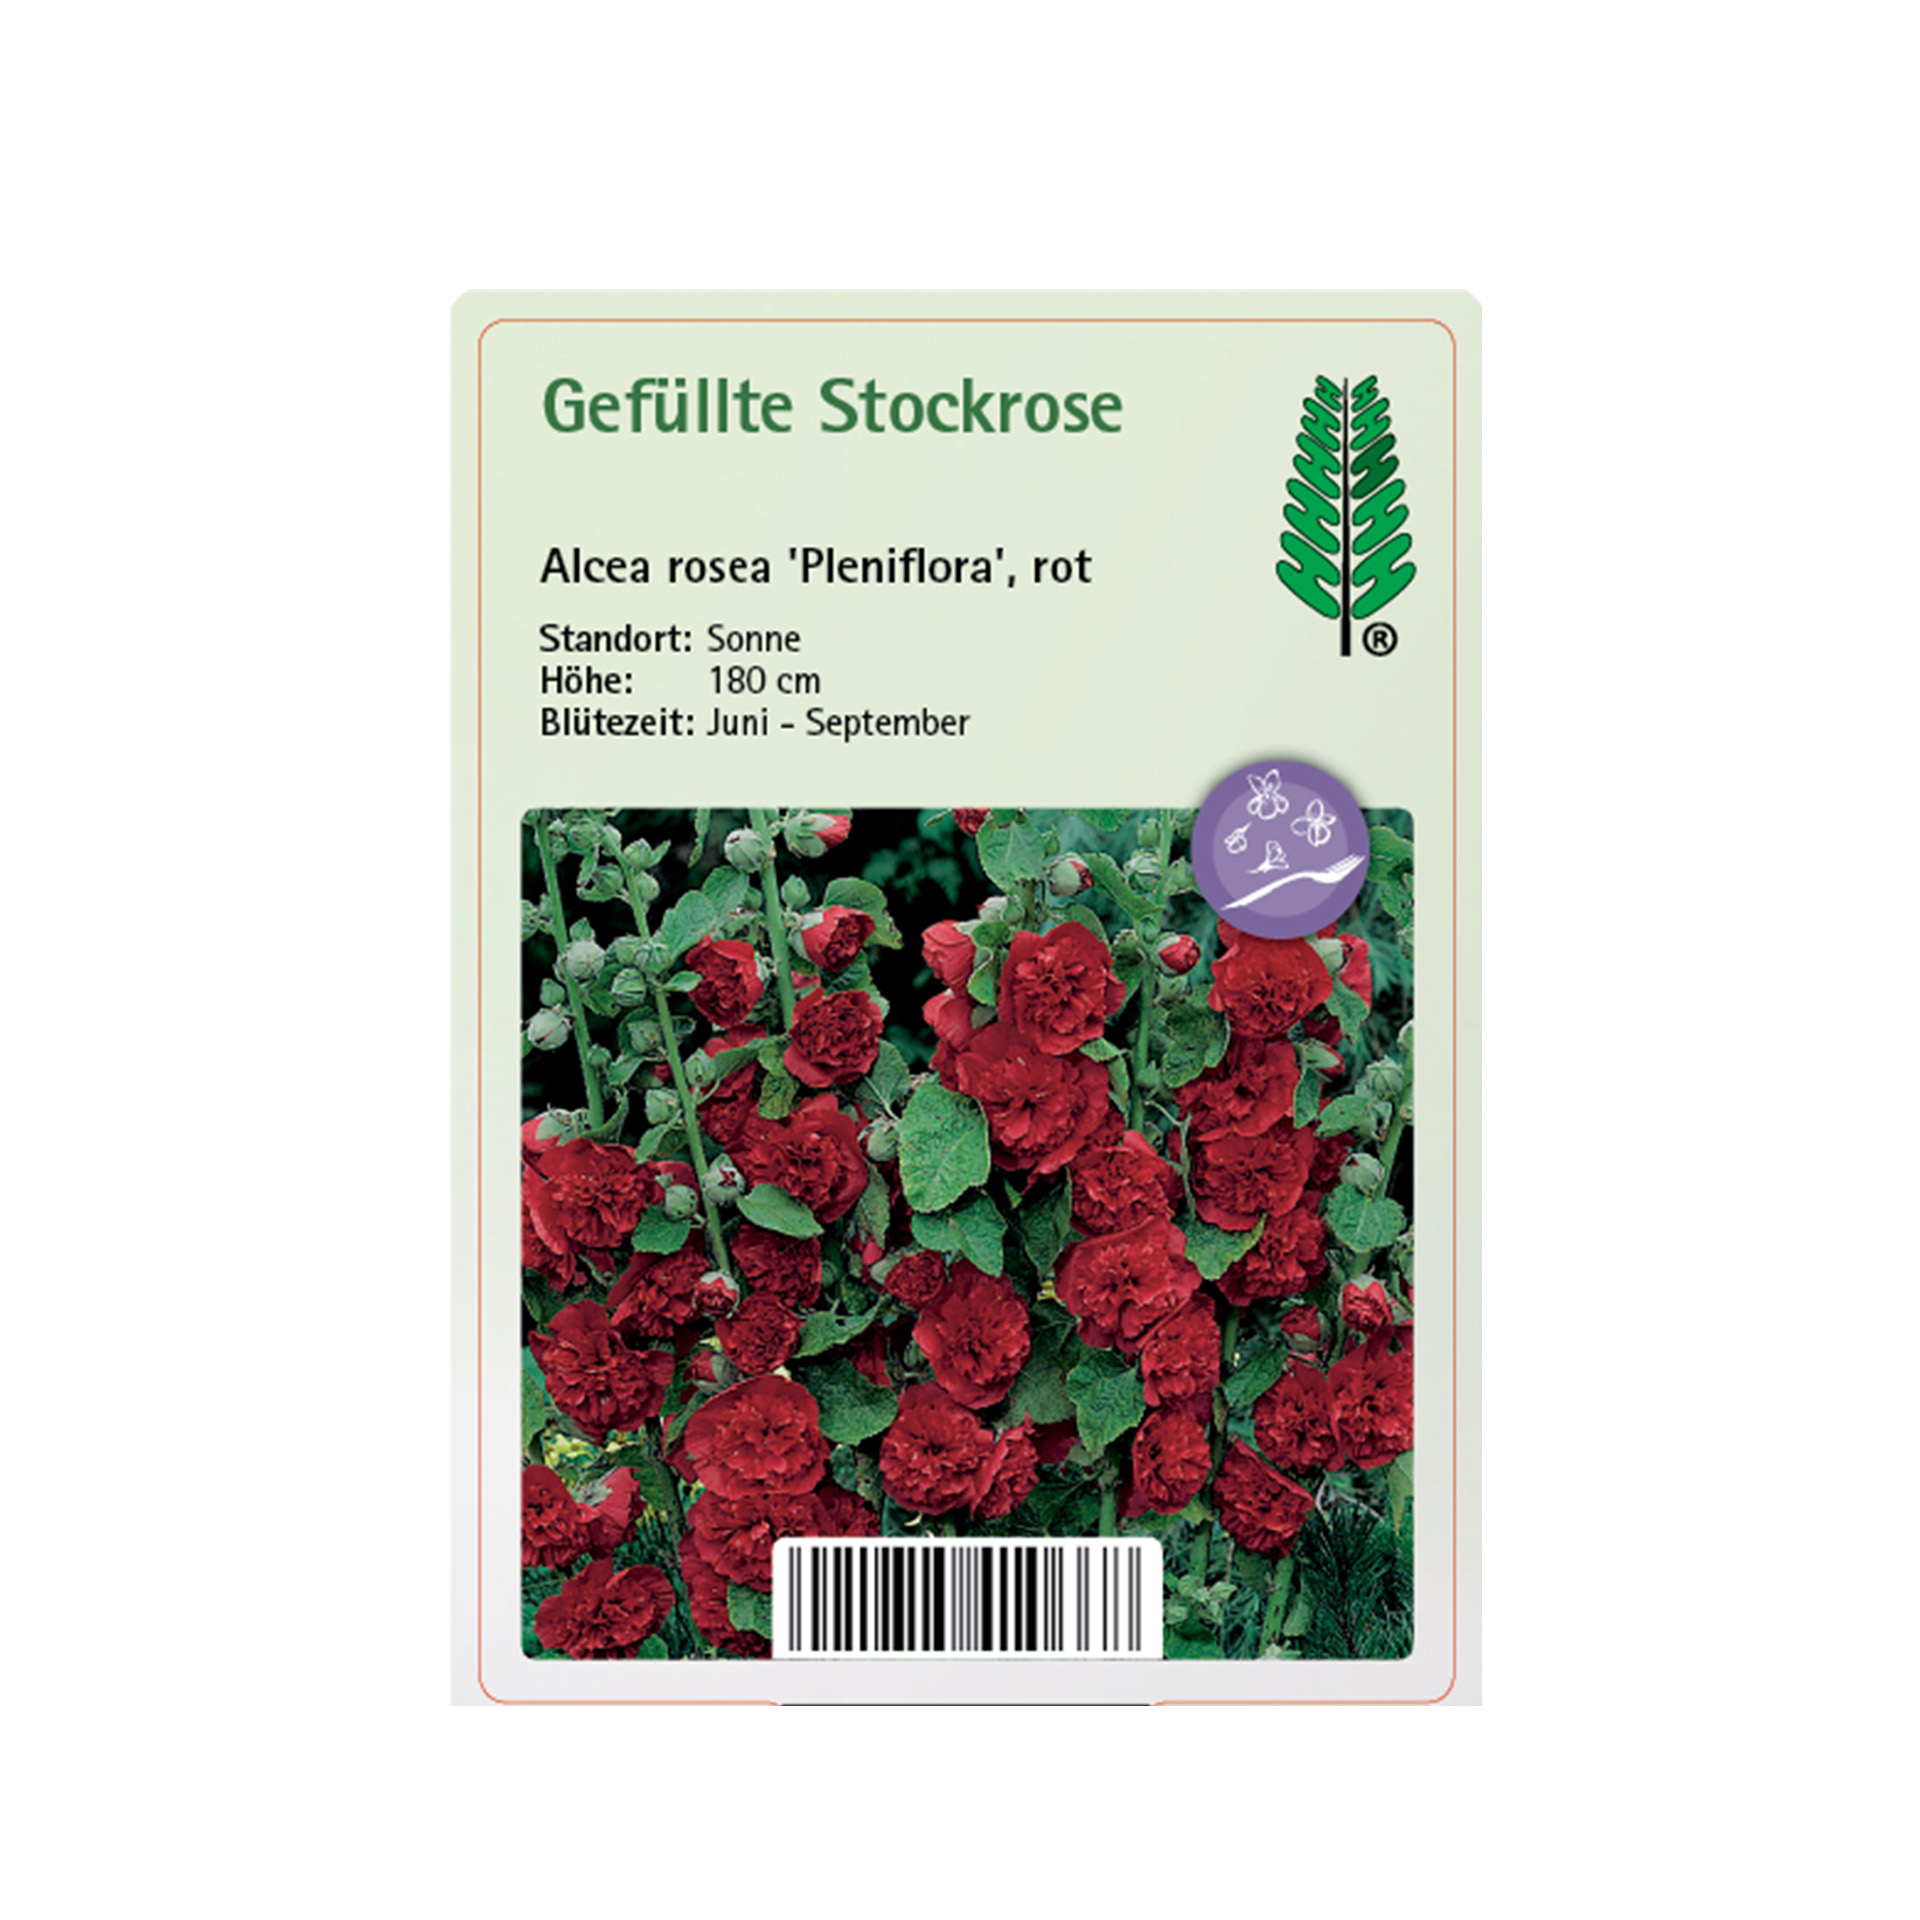 Gefüllte Stockrose - Alcea rosea 'Pleniflora' rot, 11cm Topf